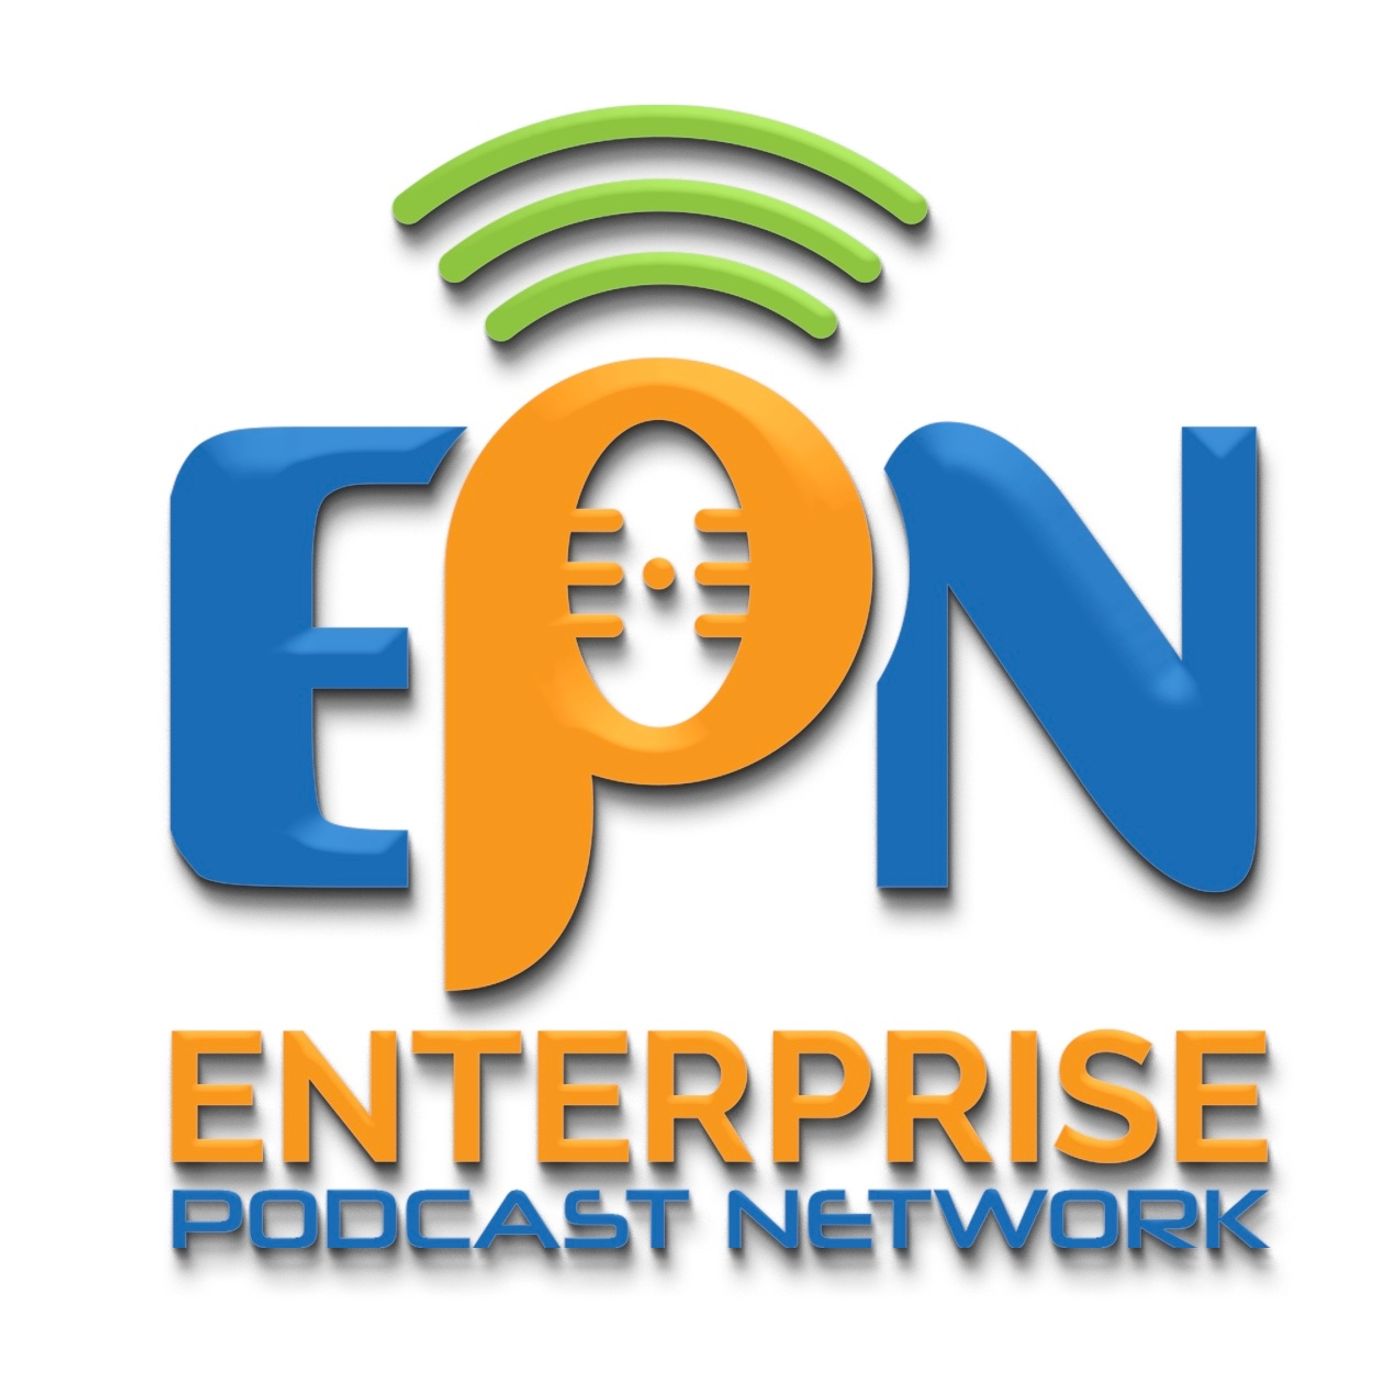 Enterprise Podcast Network – EPN